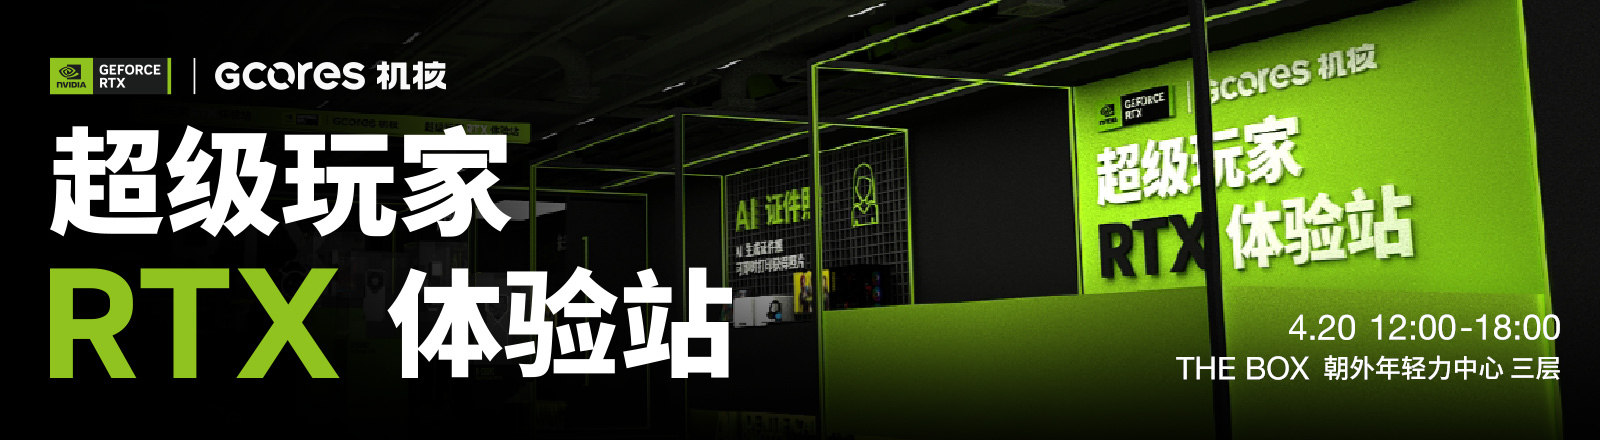 GeForce x GCORES 超級玩家 RTX 體驗站 招募開啟！｜北京活動